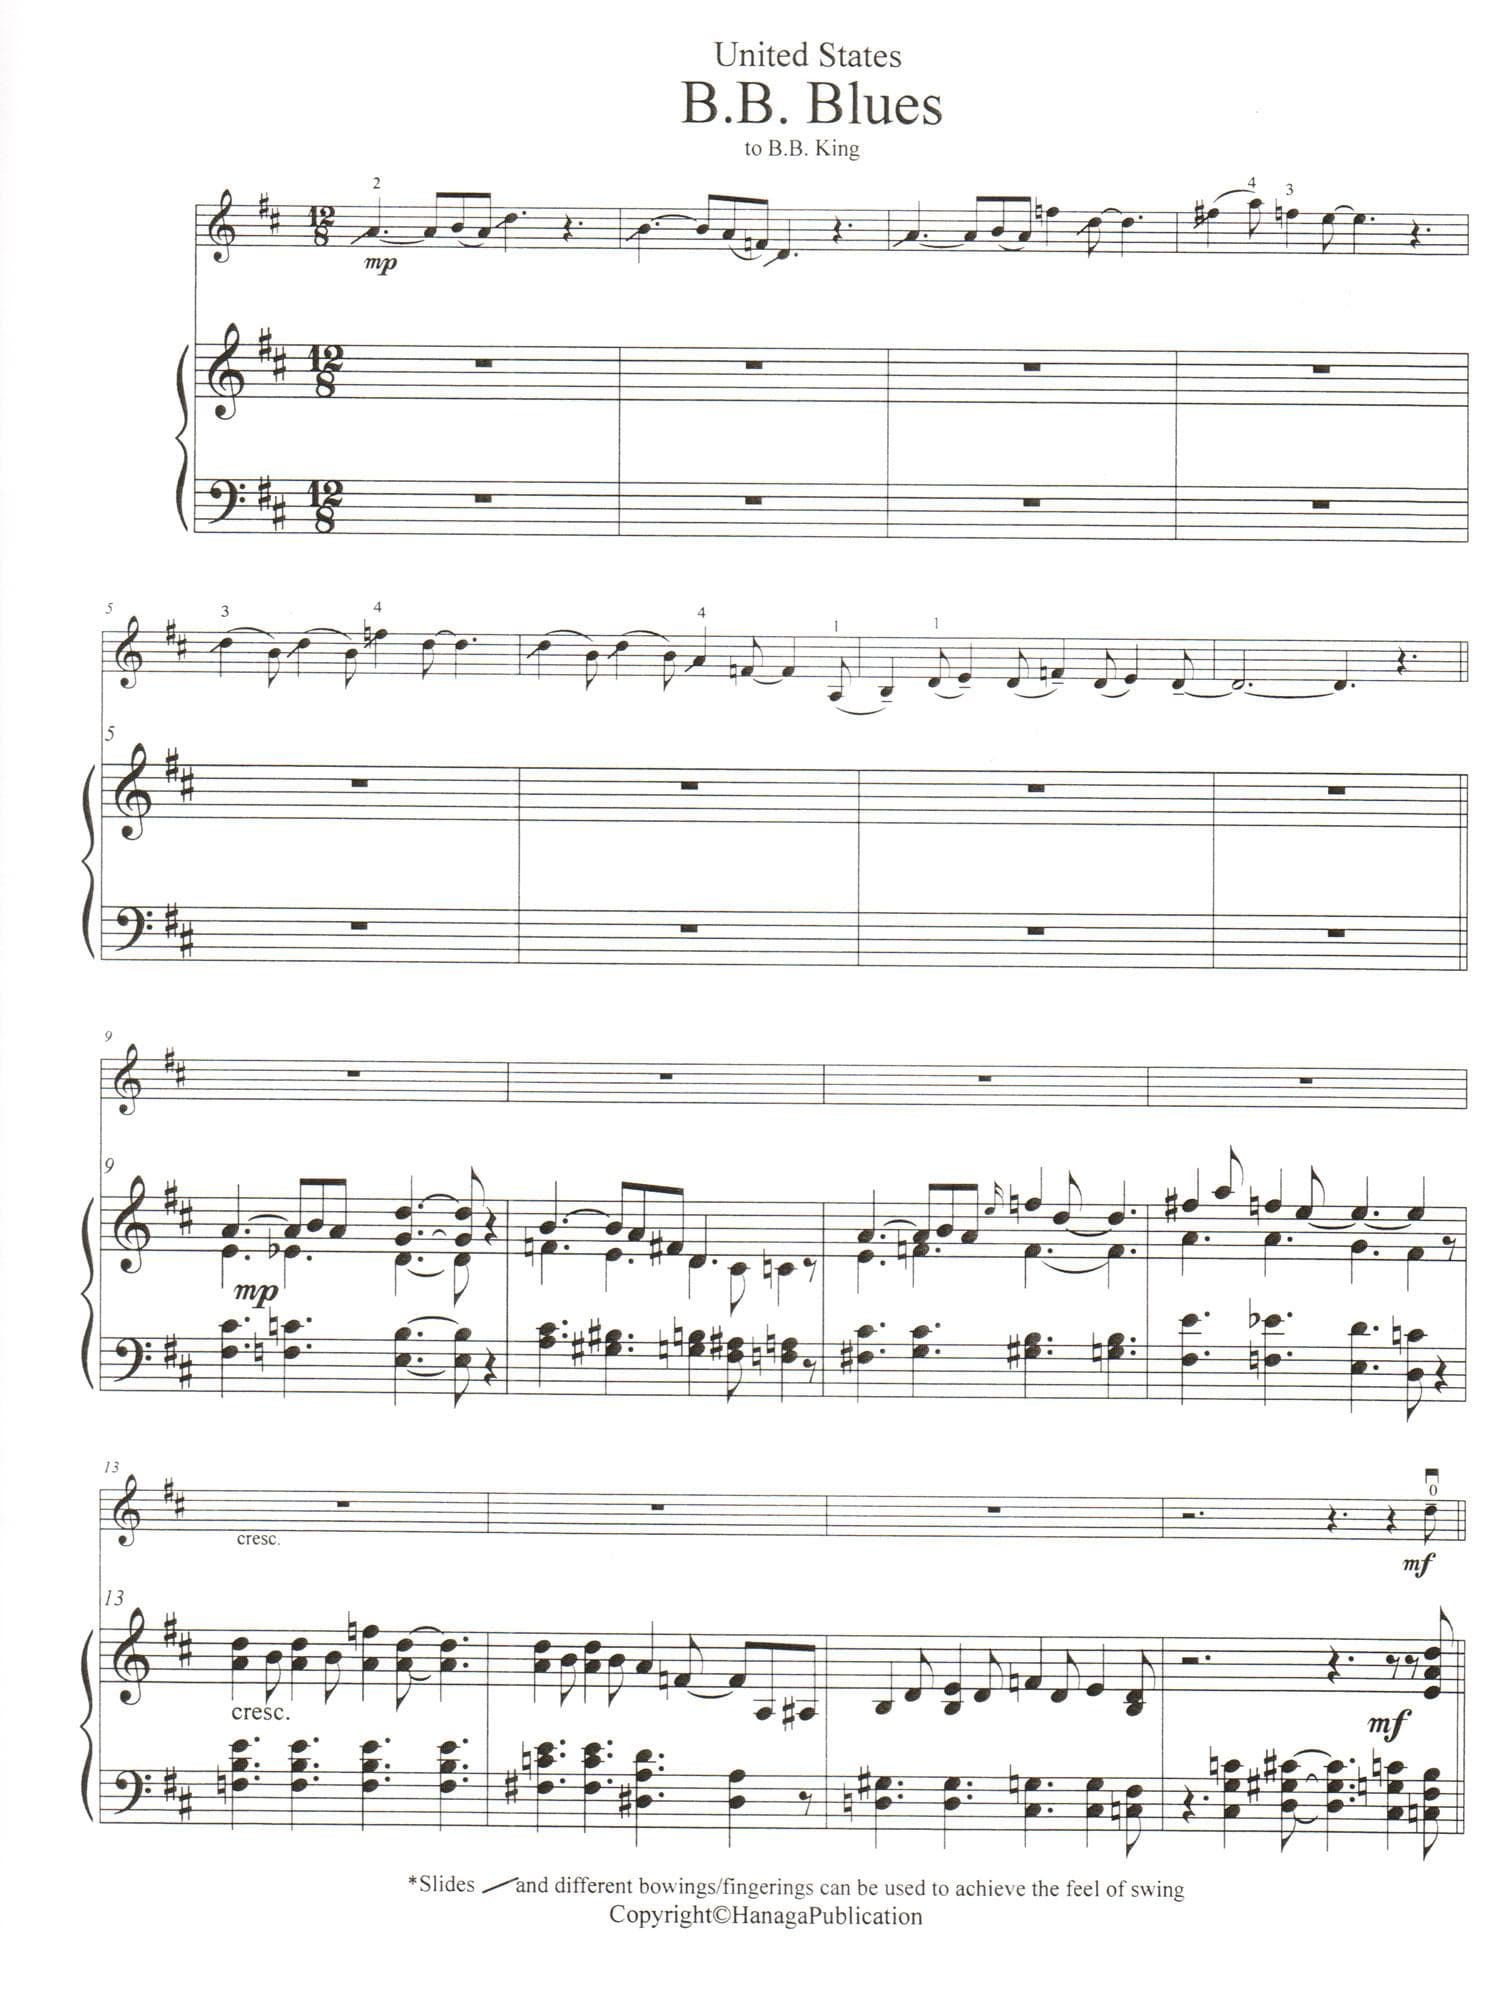 Khanagov, Karén - B.B. Blues - United States from Parade of Nations - for Violin and Piano - Hanaga Publication